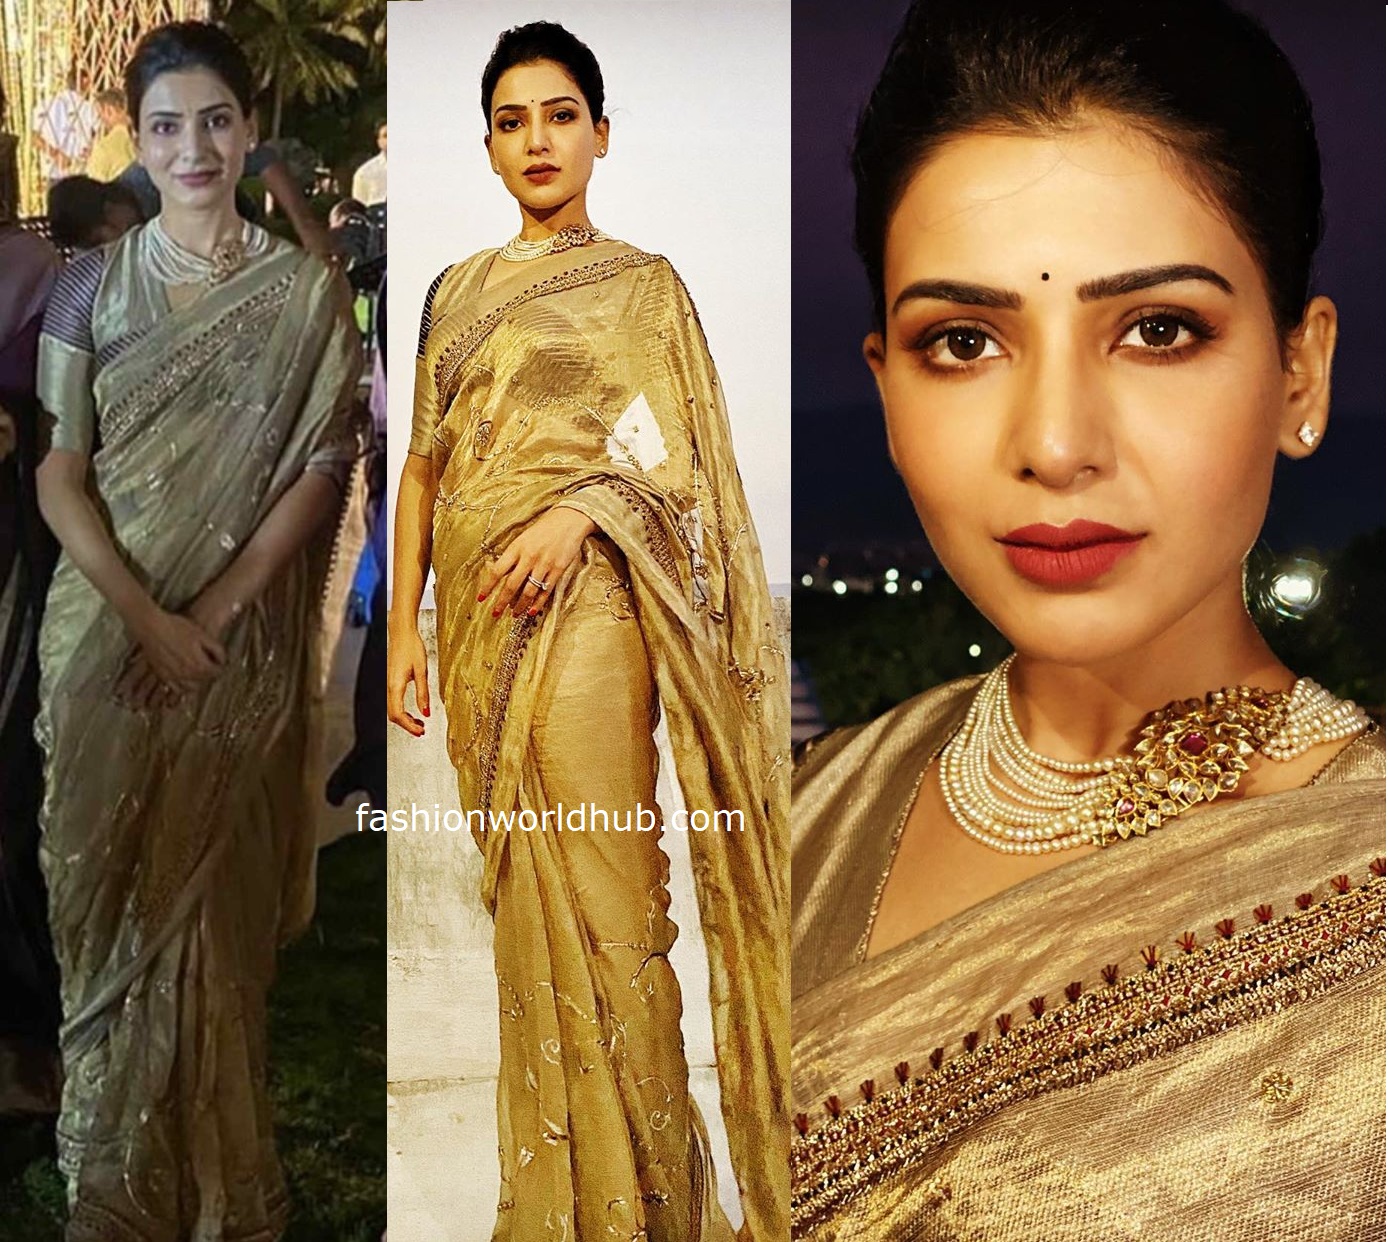 Samantha Akkineni in Banarasi saree serves the perfect wedding look